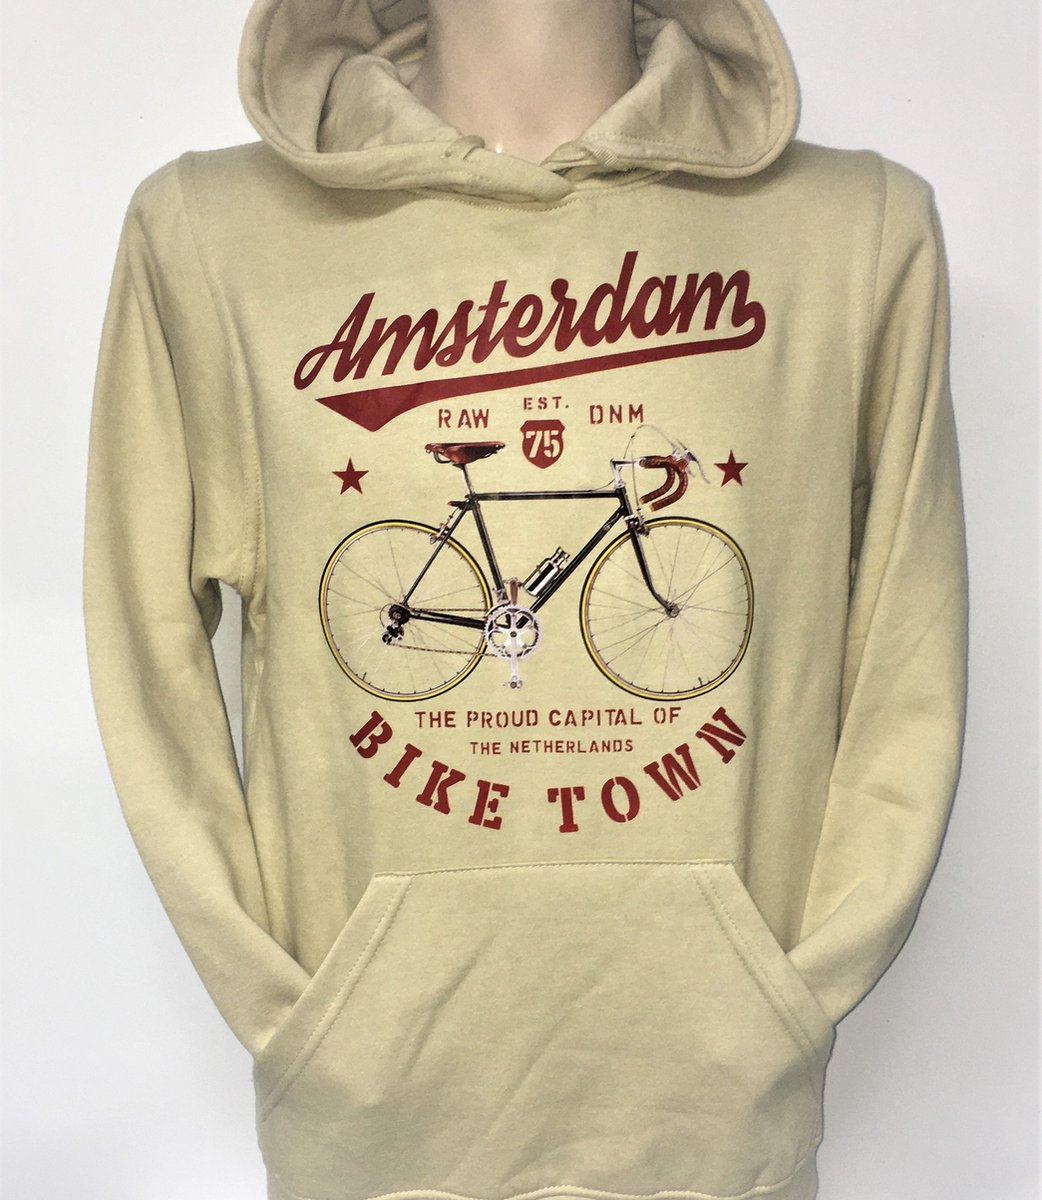 Hooded Sweater - Met Trekkoord - Capuchon - Chill - Trui - Vest - met capuchon - Outdoor - Fiets - Raw - Denim - Race Fiets - Capital Amsterdam - Bike Town - Race Fiets Amsterdam - Zand - Beige - Maat L